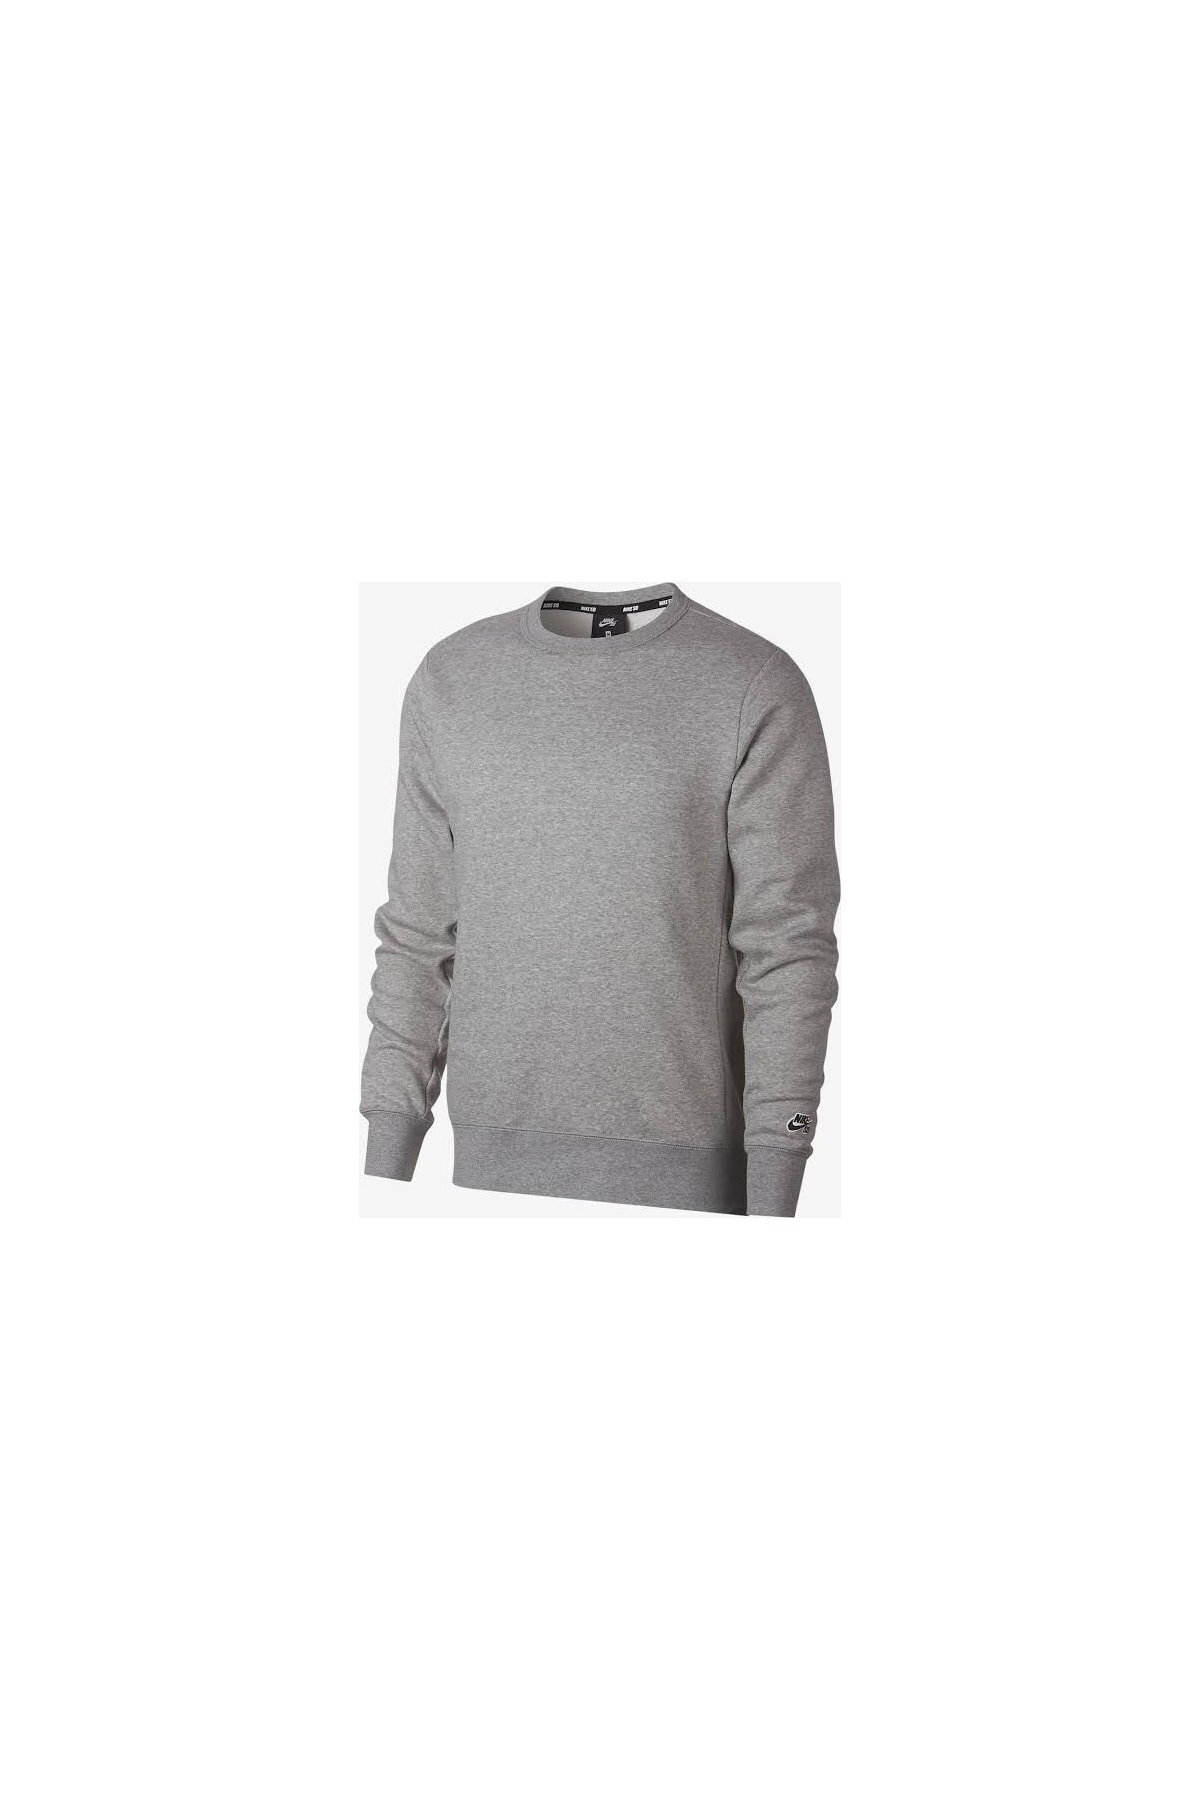 Nike Sb Icon Fleece Essential Erkek Gri Sweatshirt